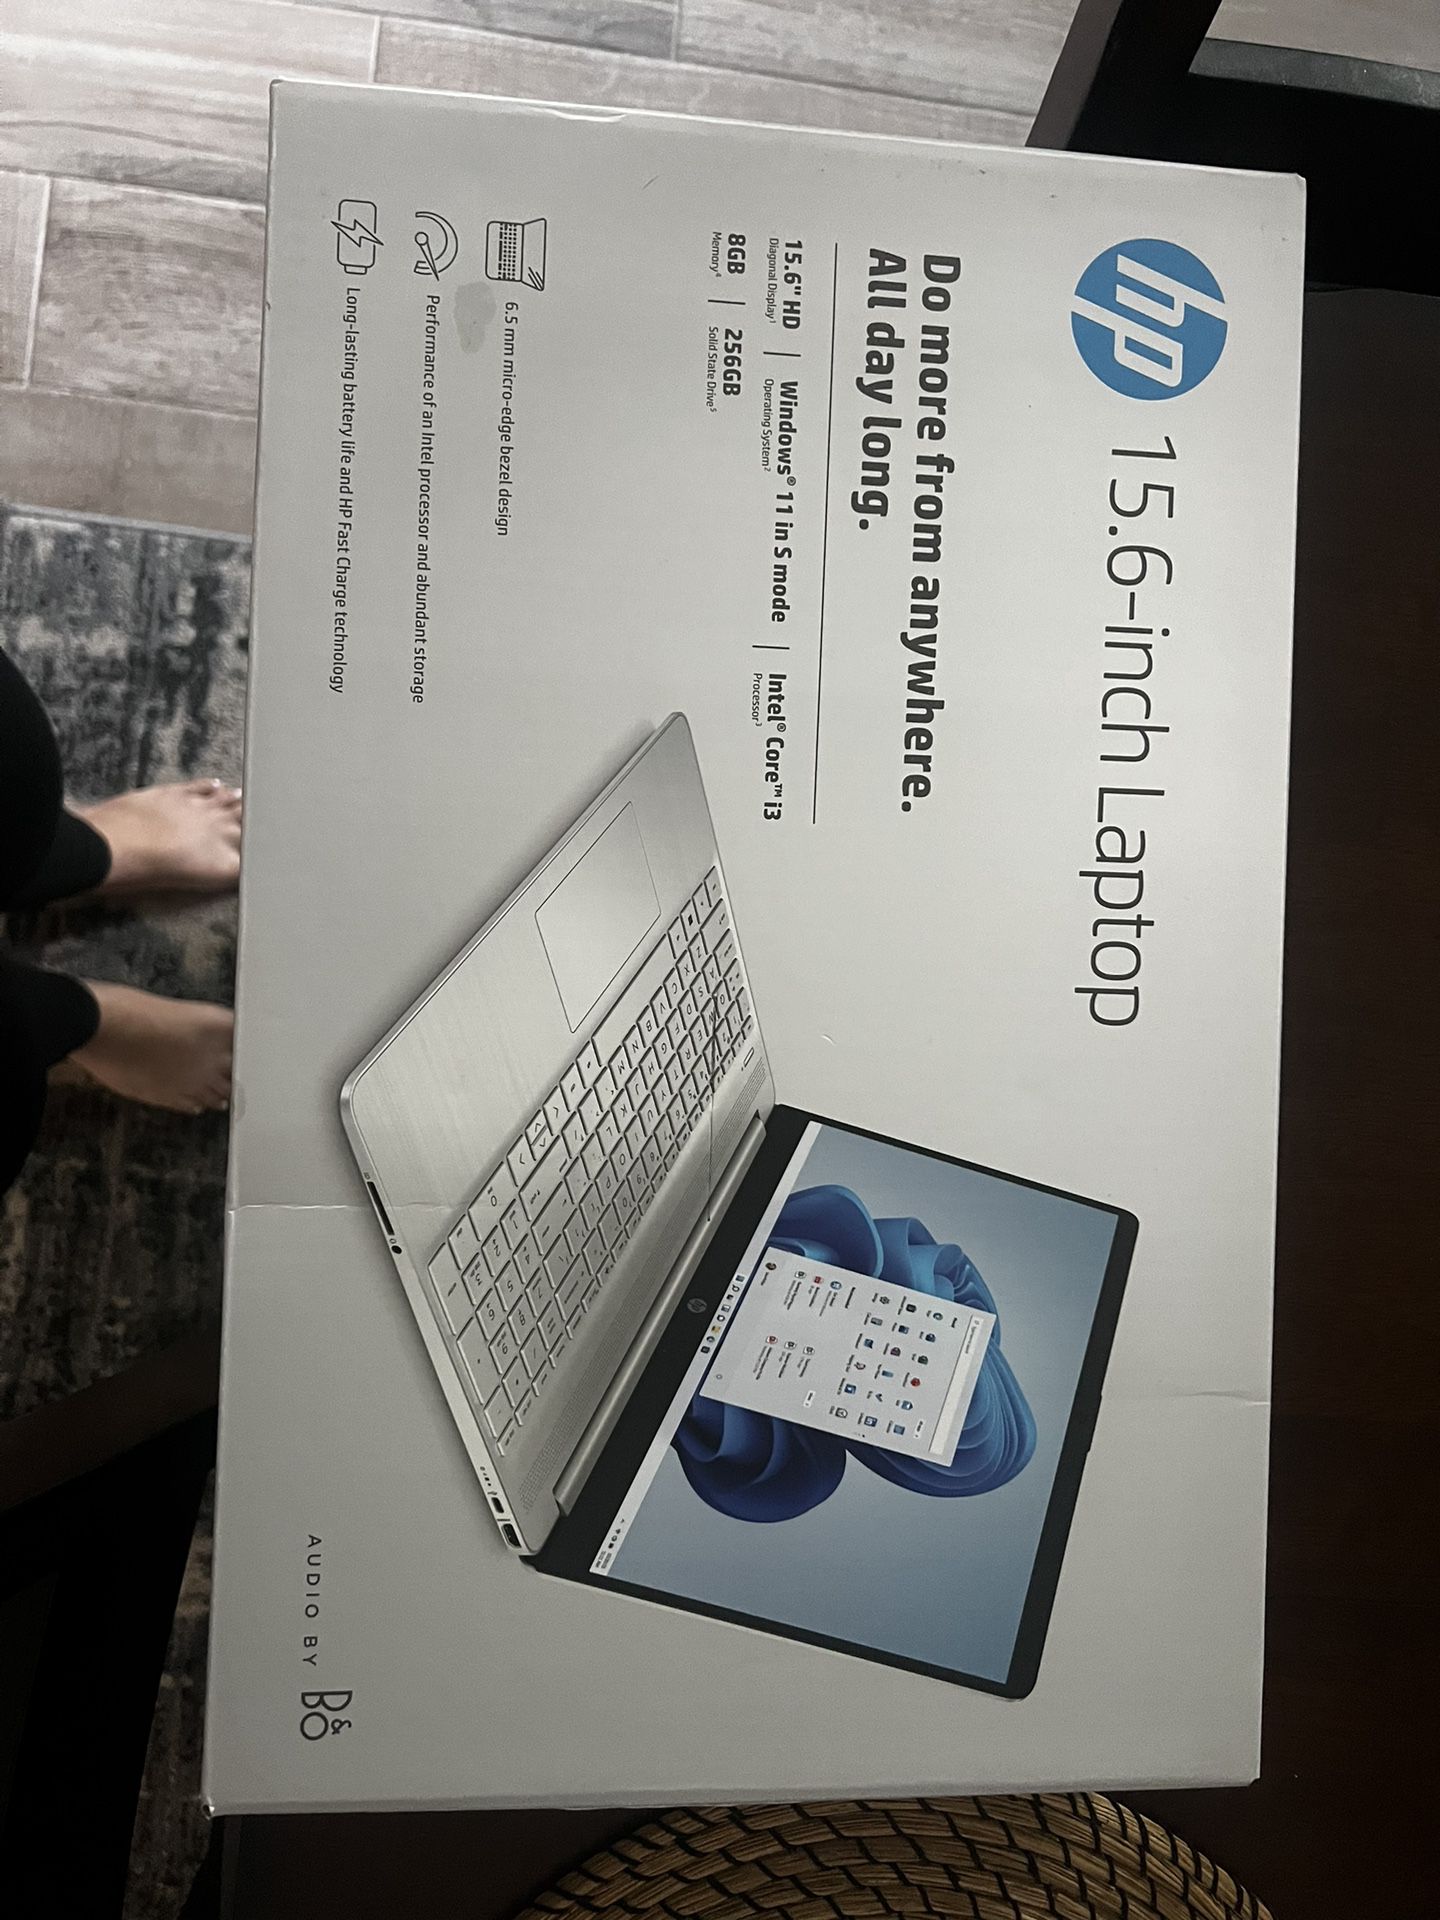 HP Laptop Unopened Box